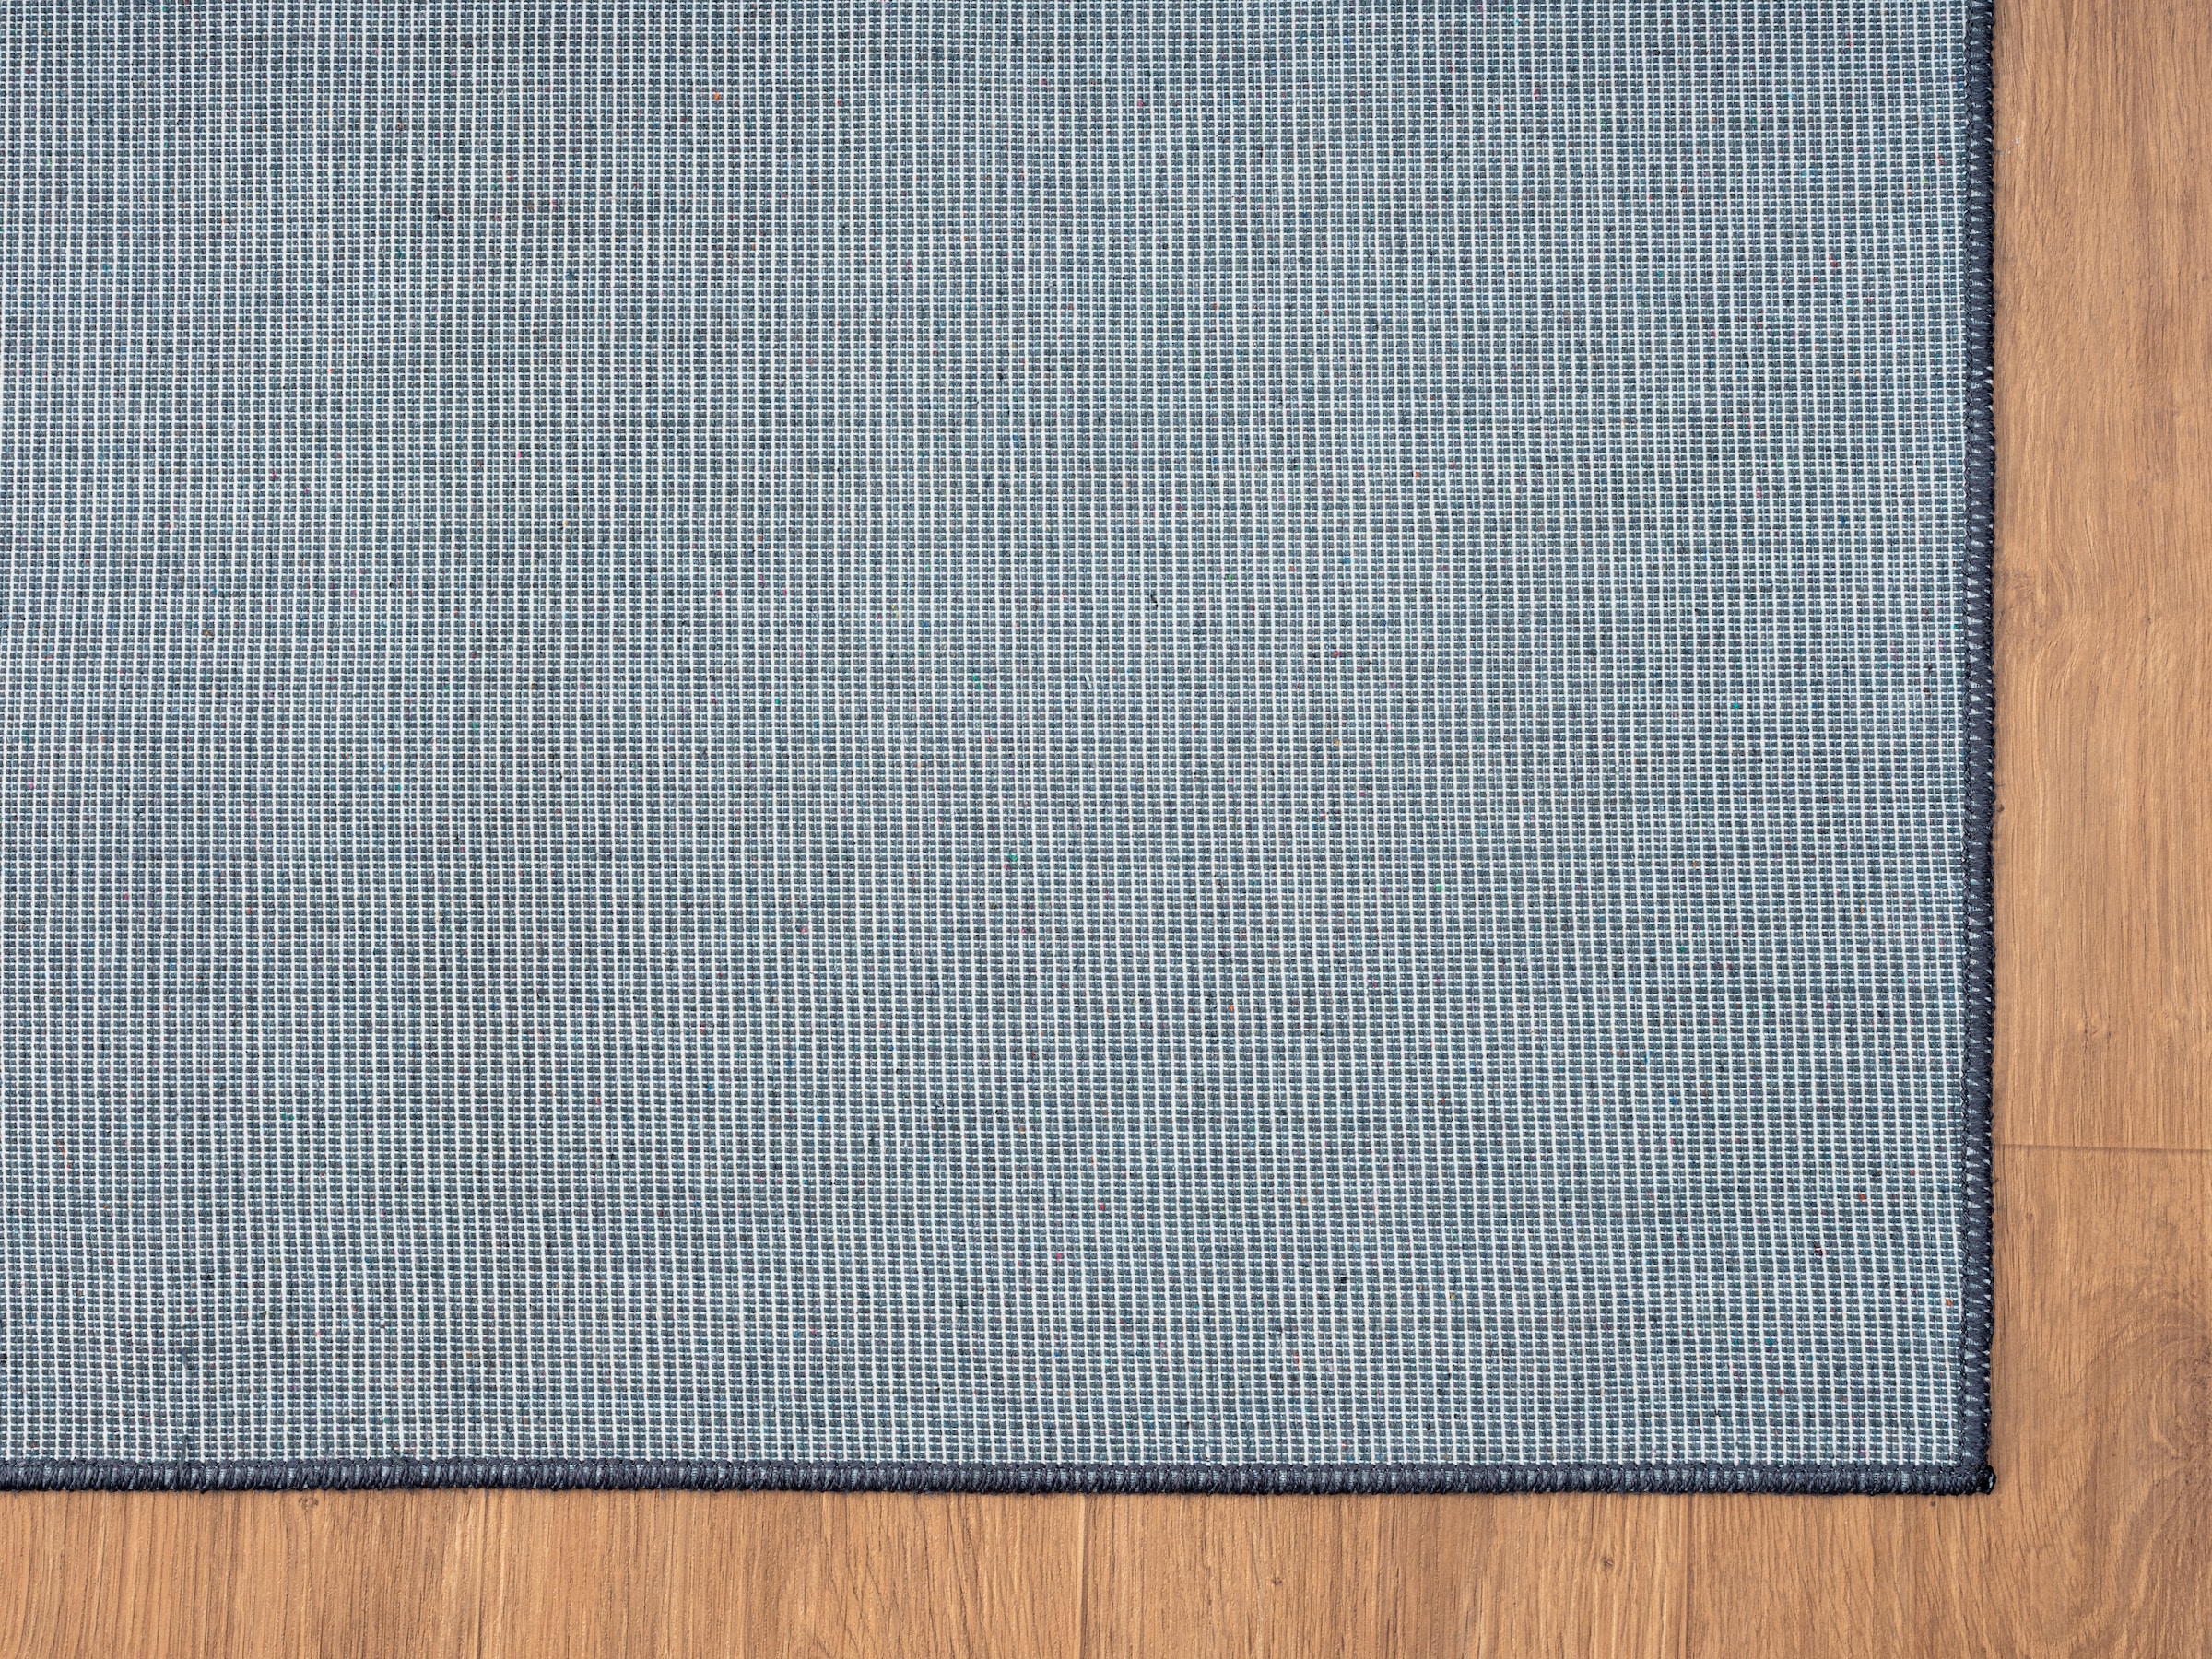 Myflair Möbel & Accessoires Teppich »Reese«, rechteckig, bedruckt, gestreift, modernes Design, In- & Outdoor geeignet, waschbar